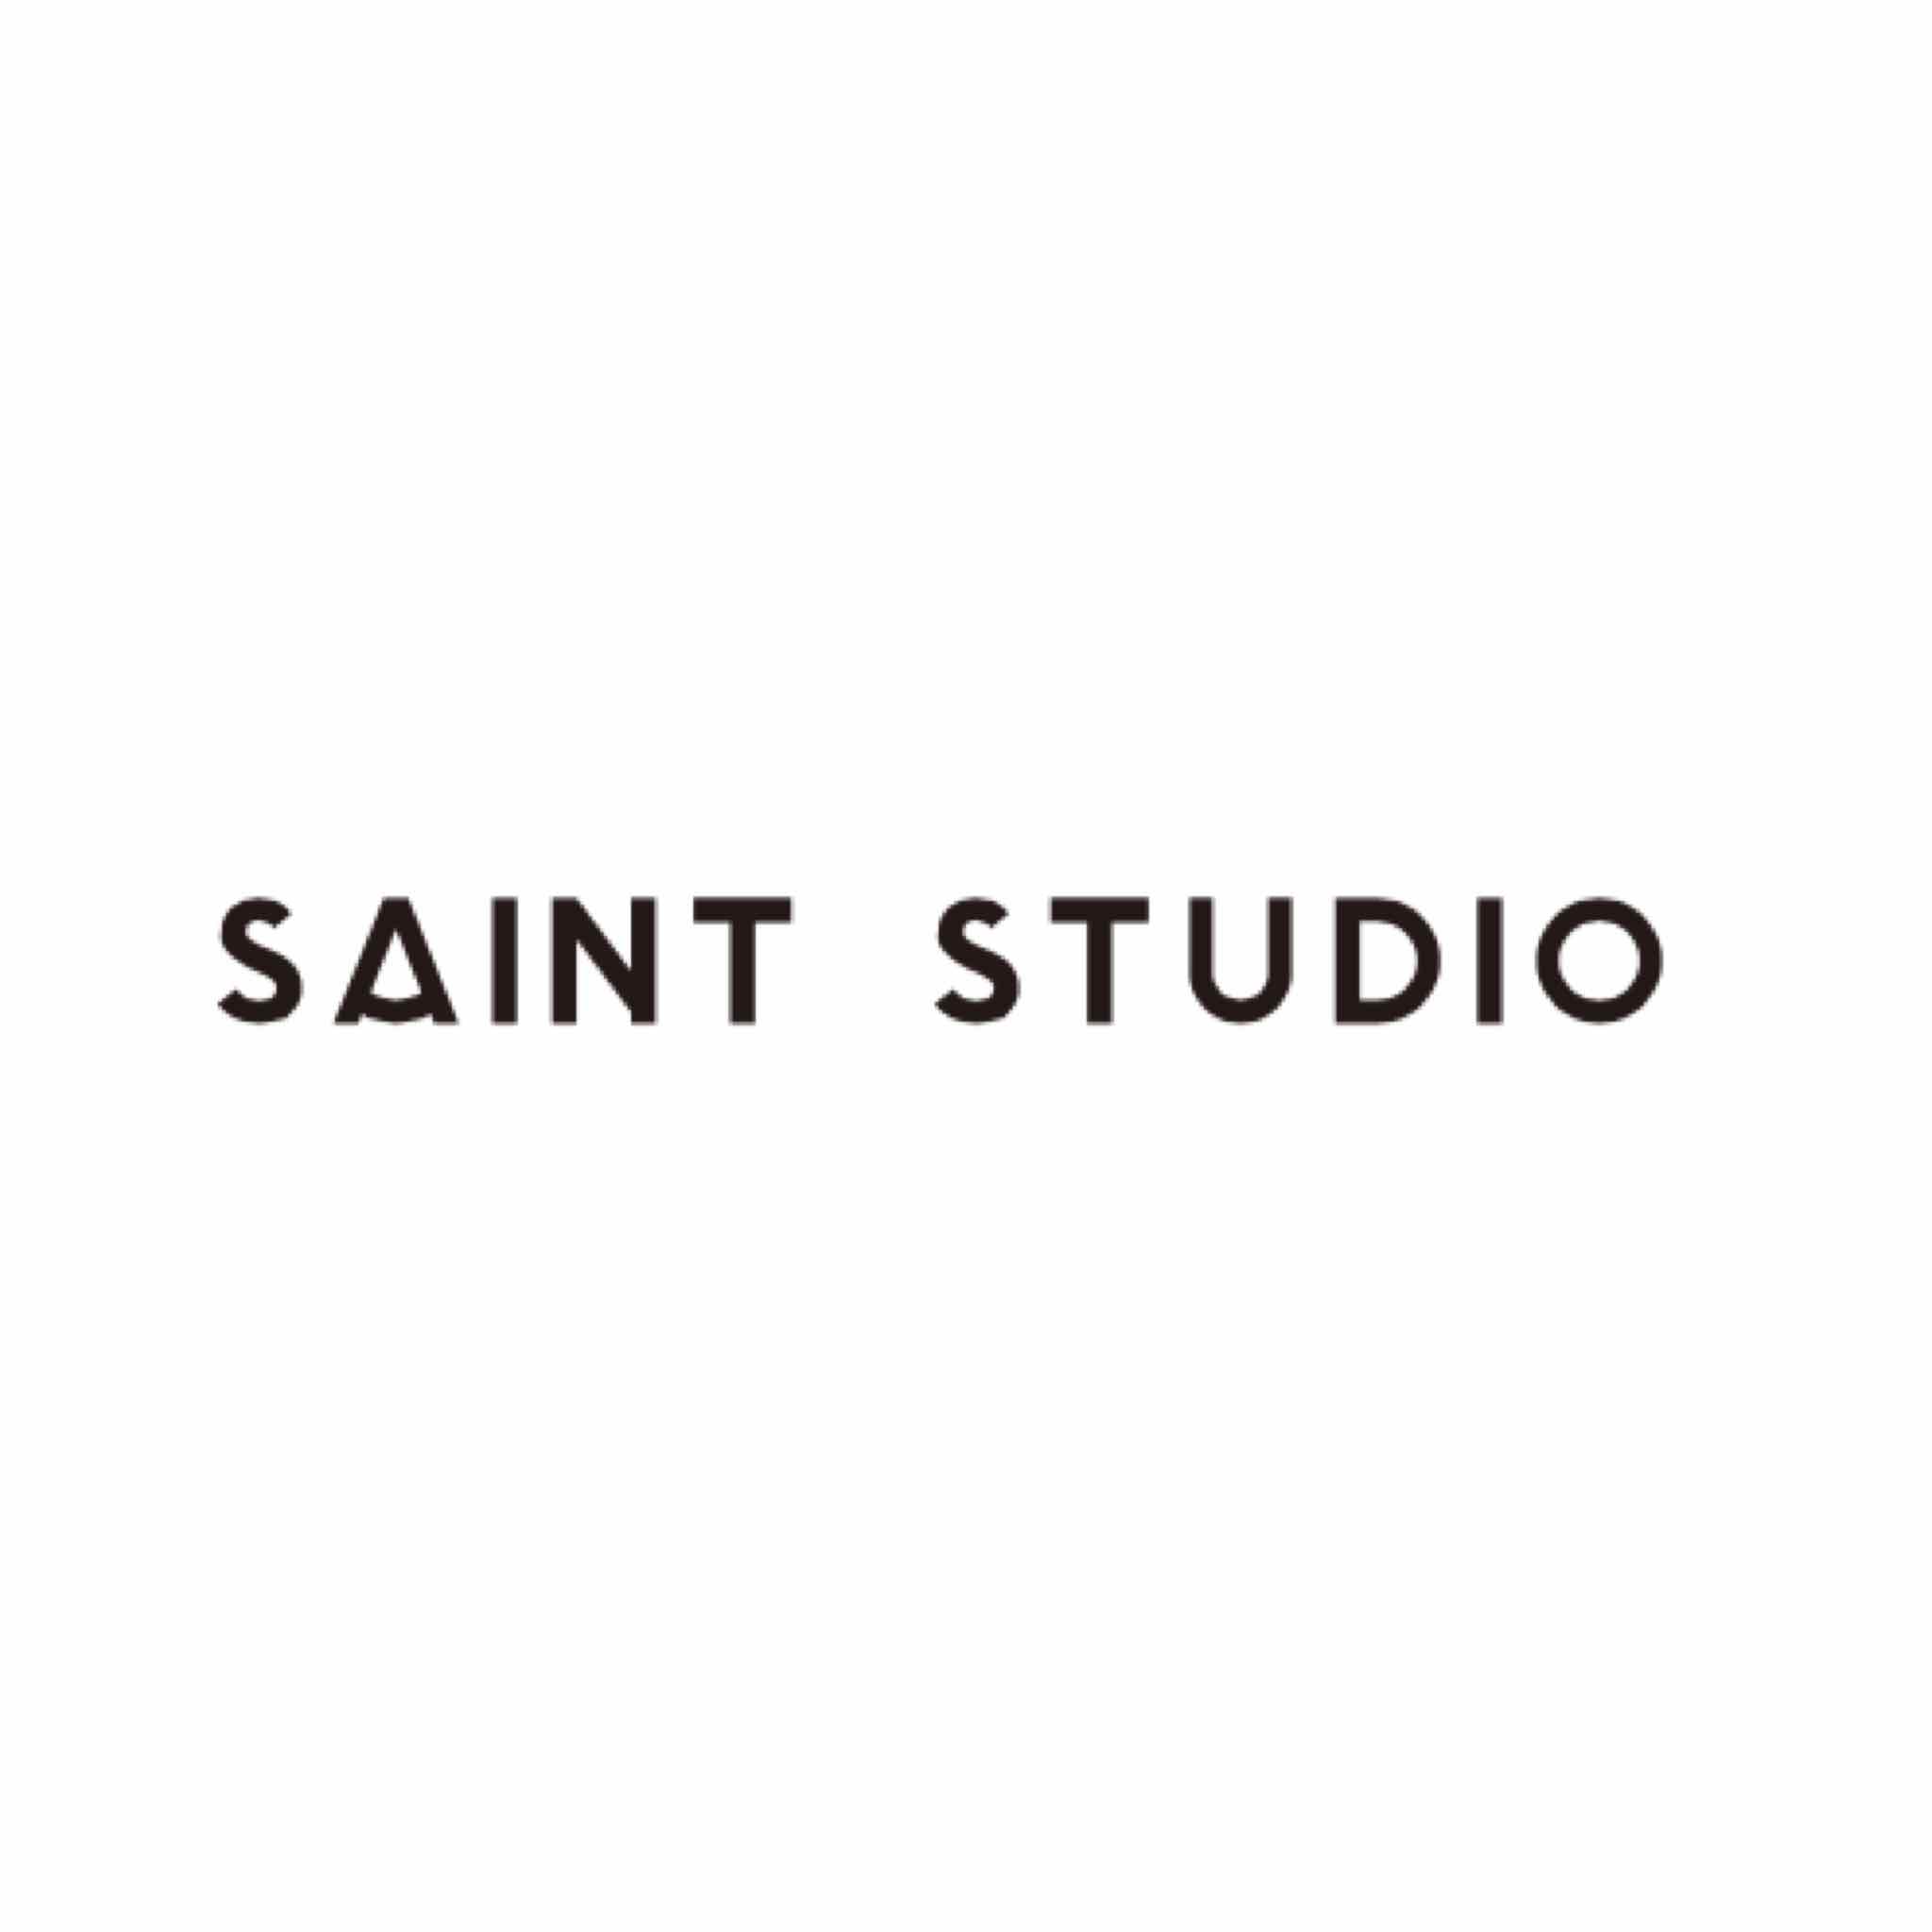 SaintStudio是正品吗淘宝店